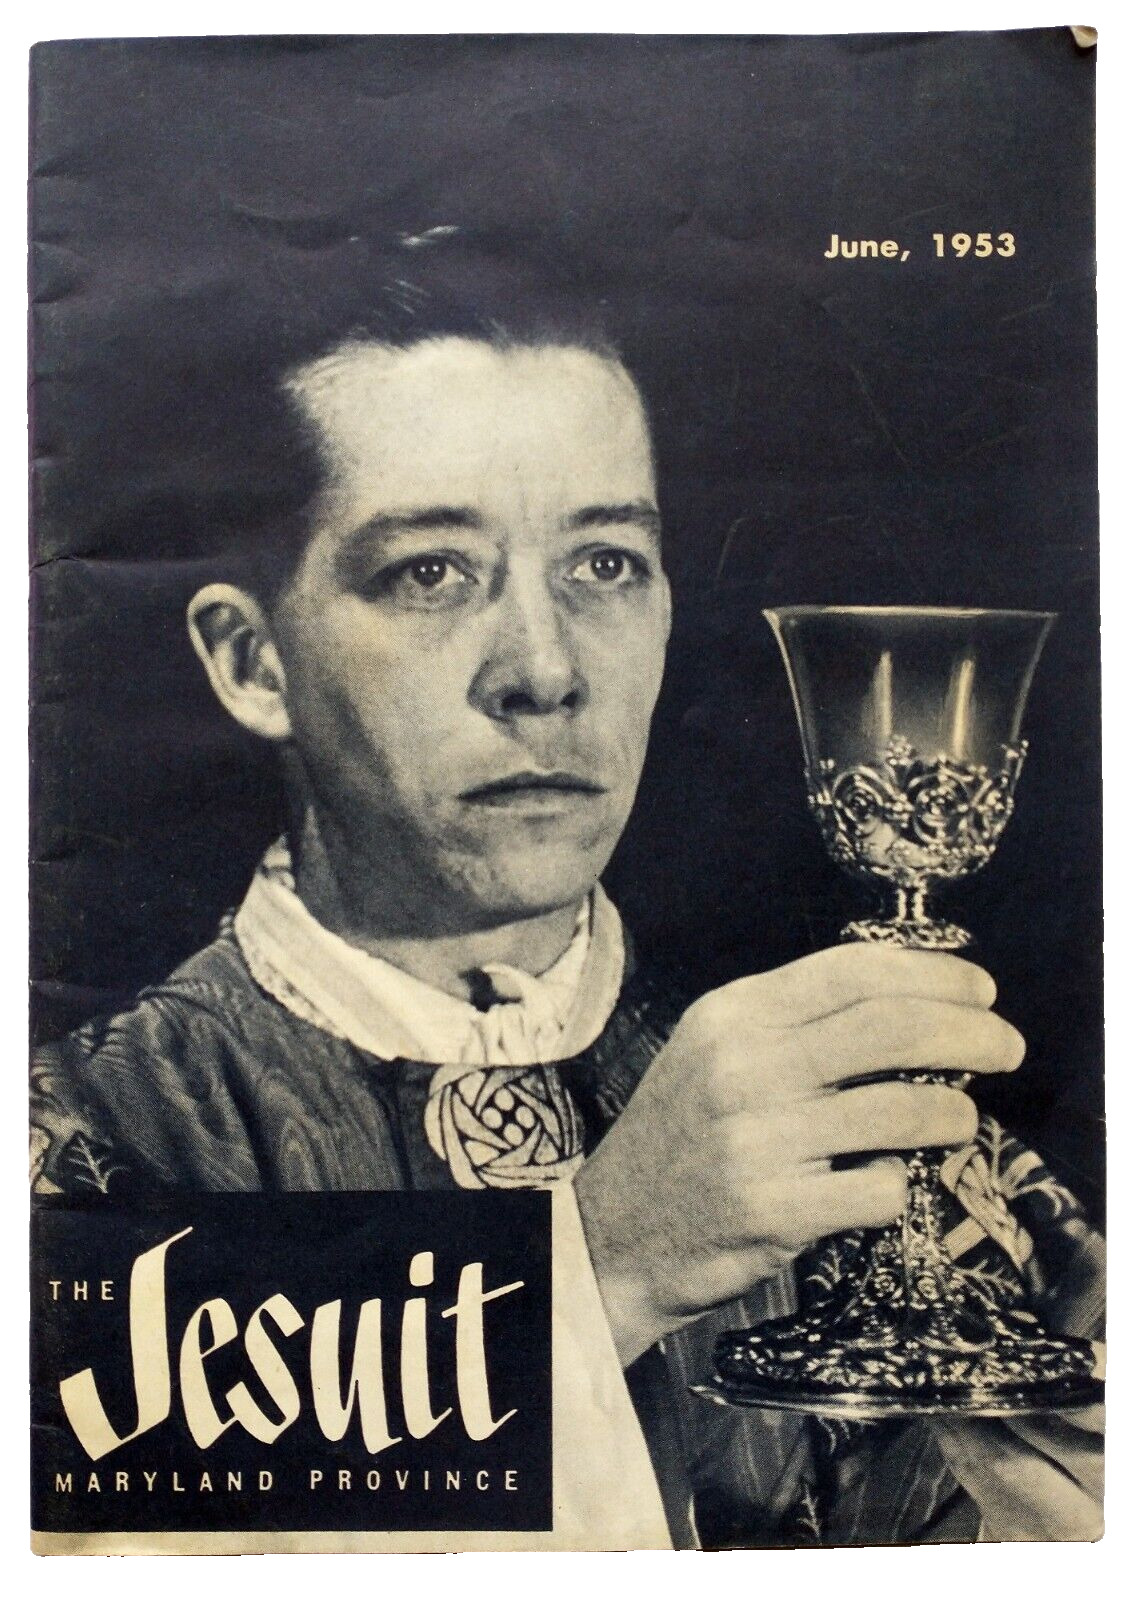 The Jesuit Maryland Province June 1953 Booklet Newsletter